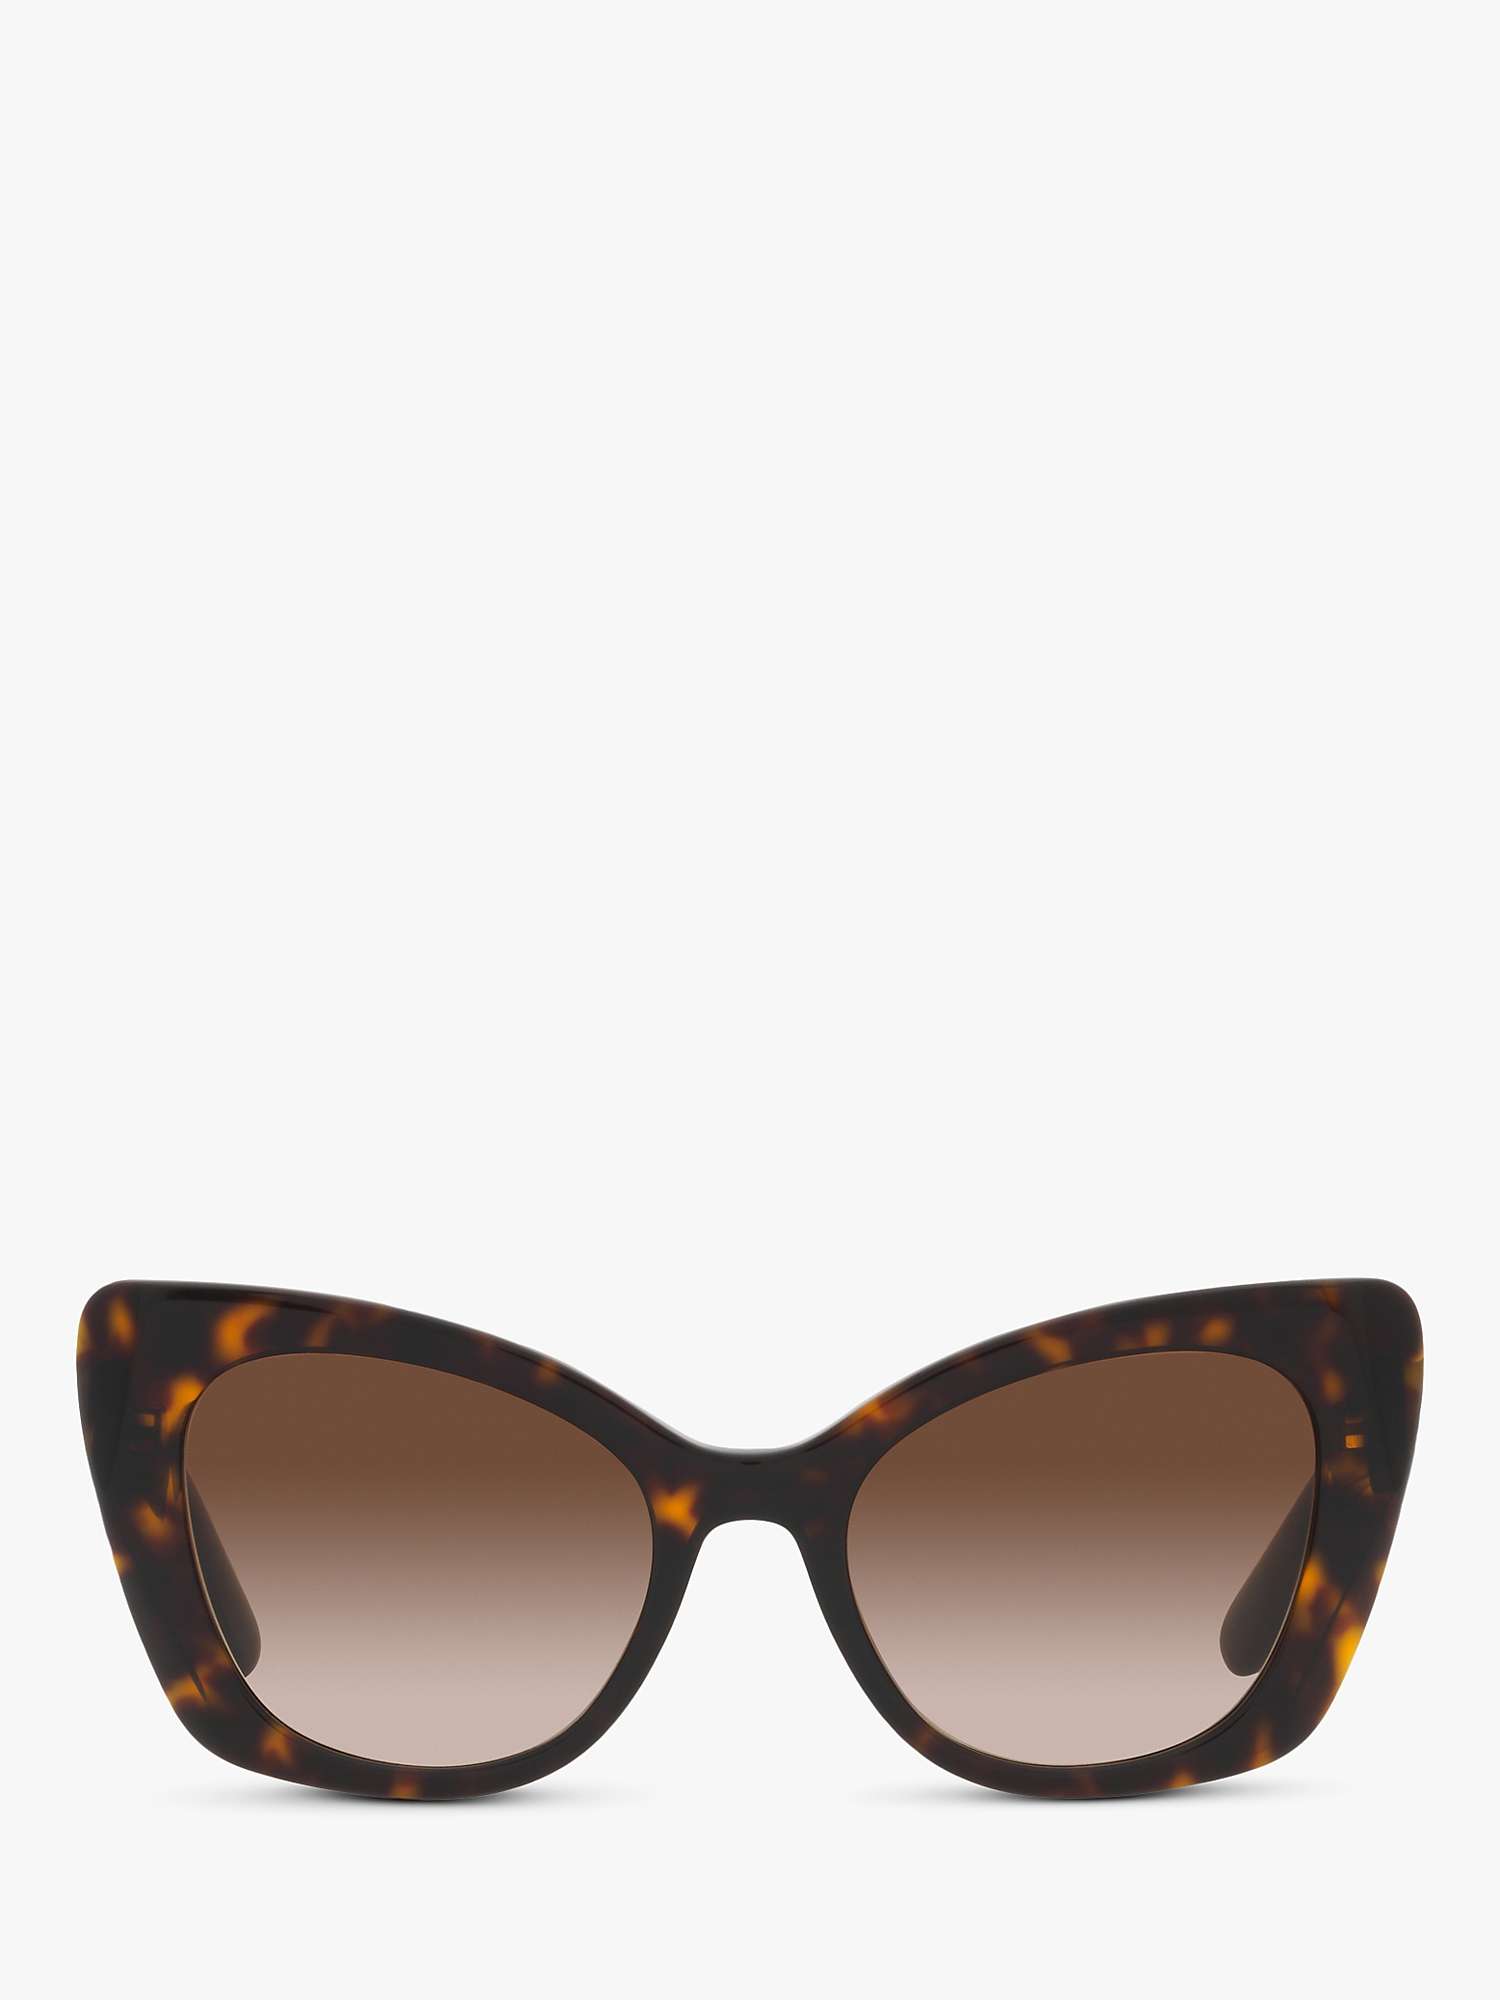 Buy Dolce & Gabbana DG4405 Women's Butterfly Sunglasses Online at johnlewis.com